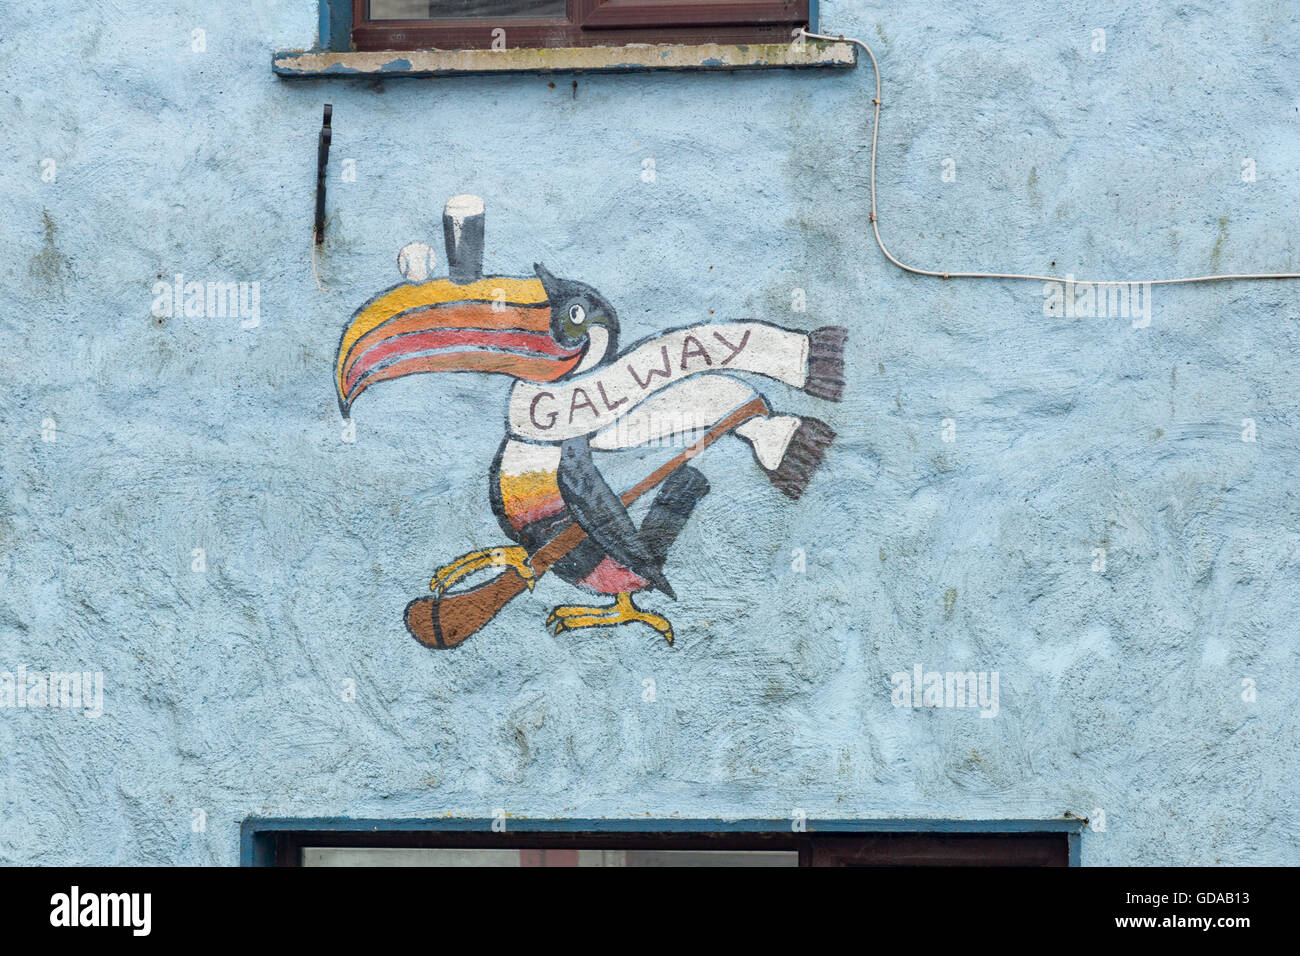 Irland, Offaly, Clonmacnoise, Papagei Malerei an Hauswand, ehemalige Kneipe in der Nähe von Clonmacnoise am Fluss Shannon Stockfoto